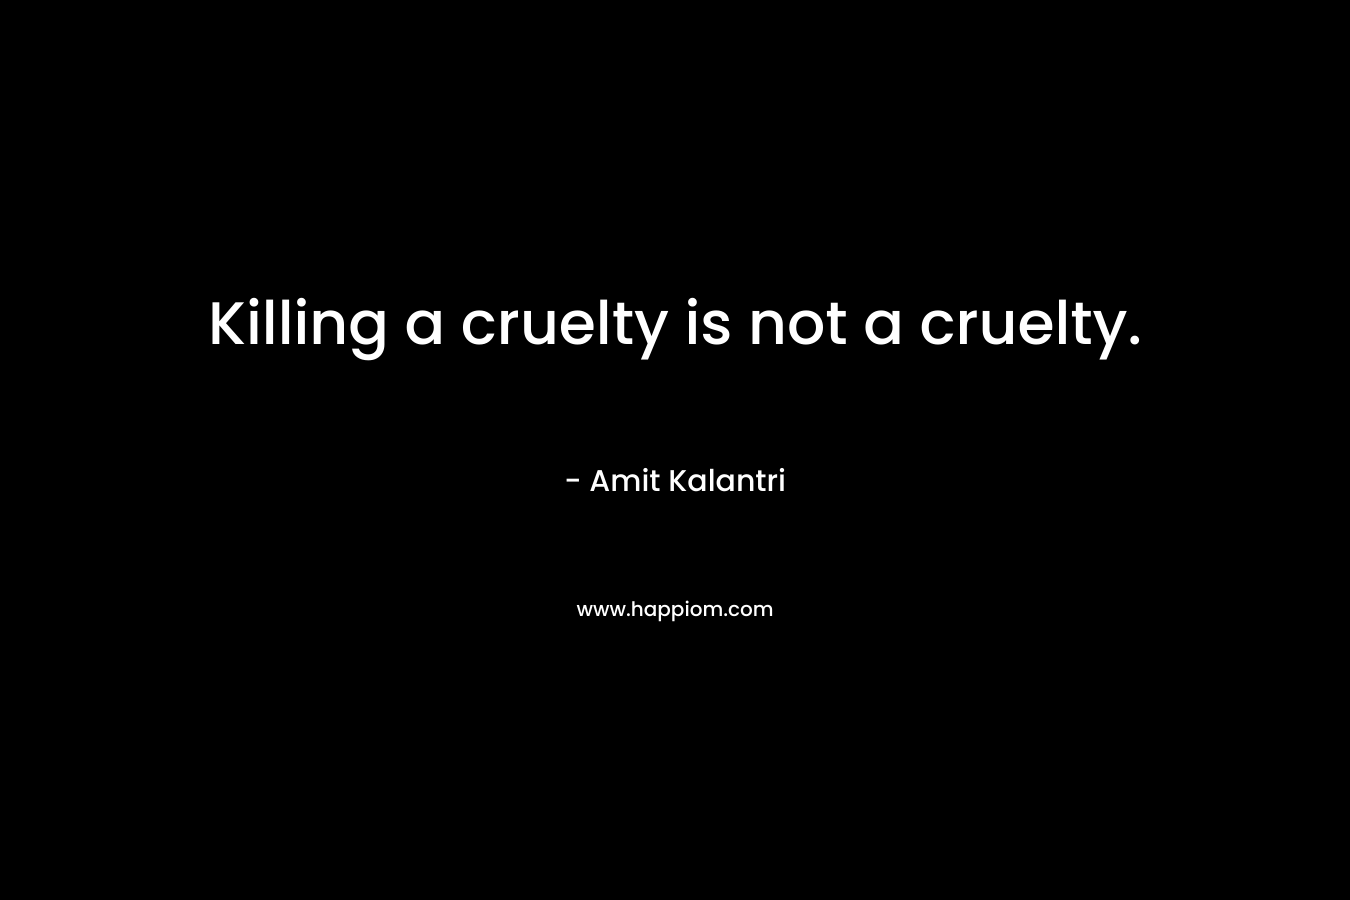 Killing a cruelty is not a cruelty.